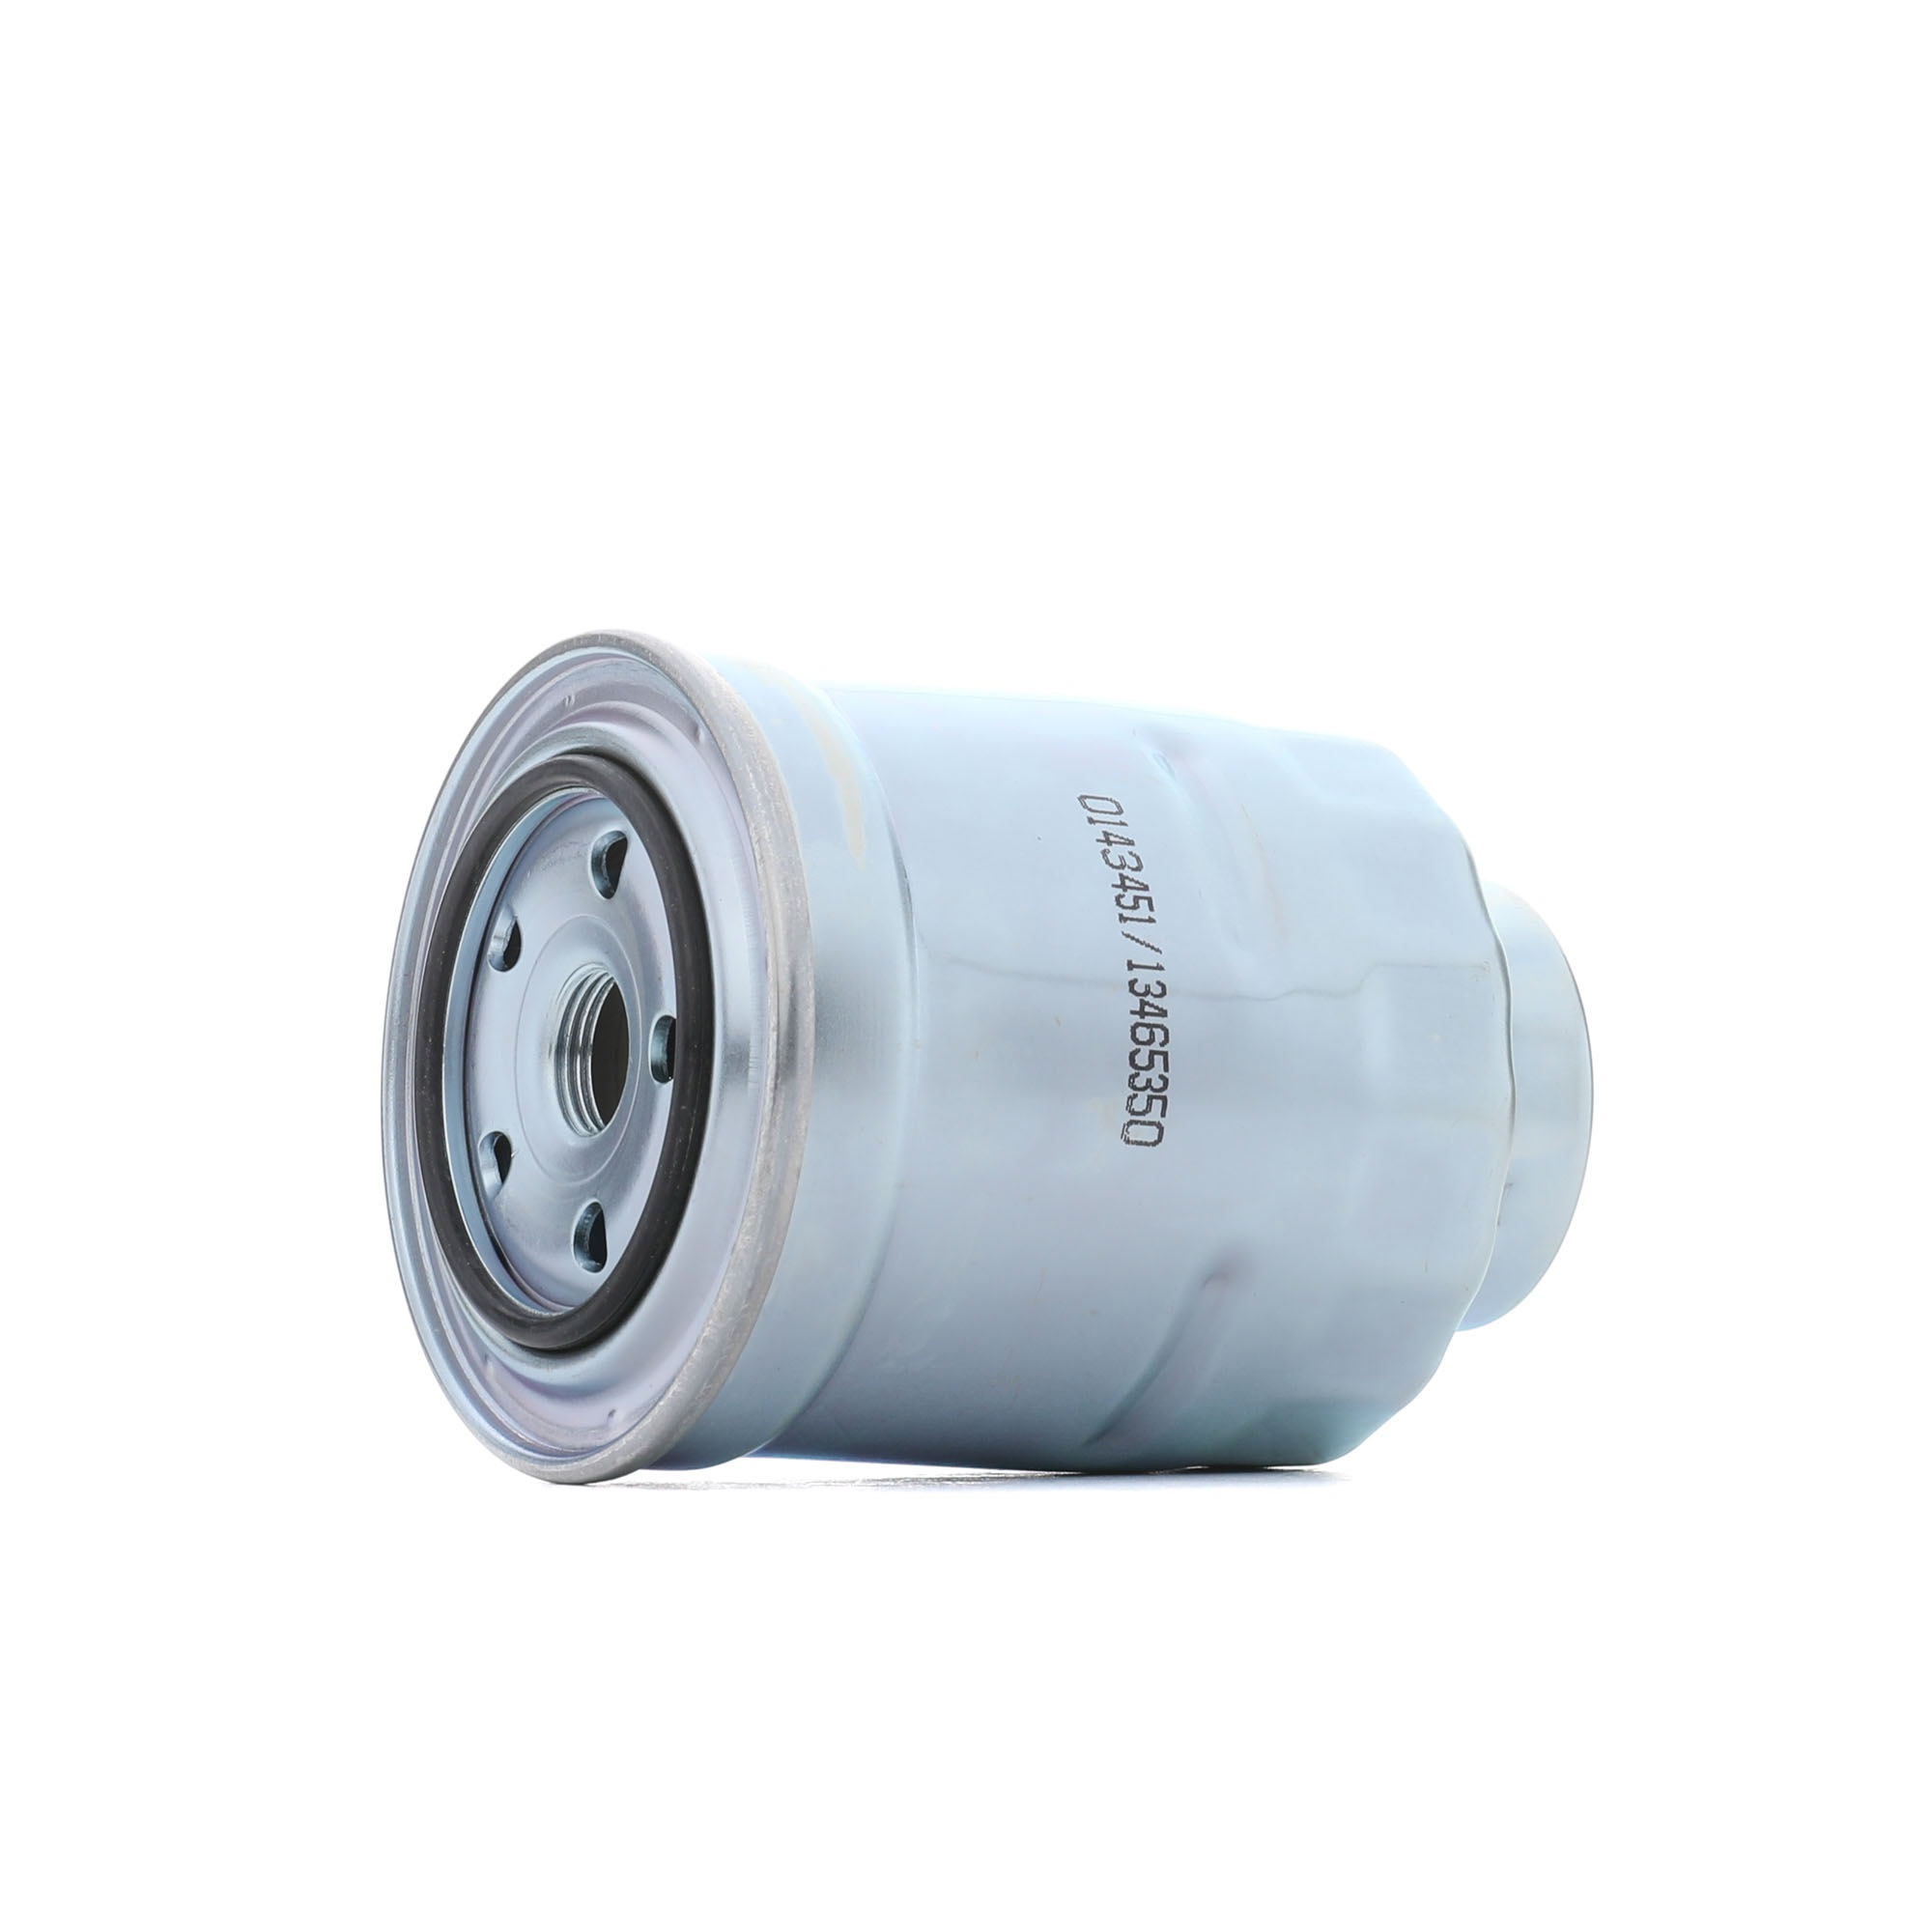 STARK SKFF-0870165 Fuel filter Spin-on Filter, with seal ring